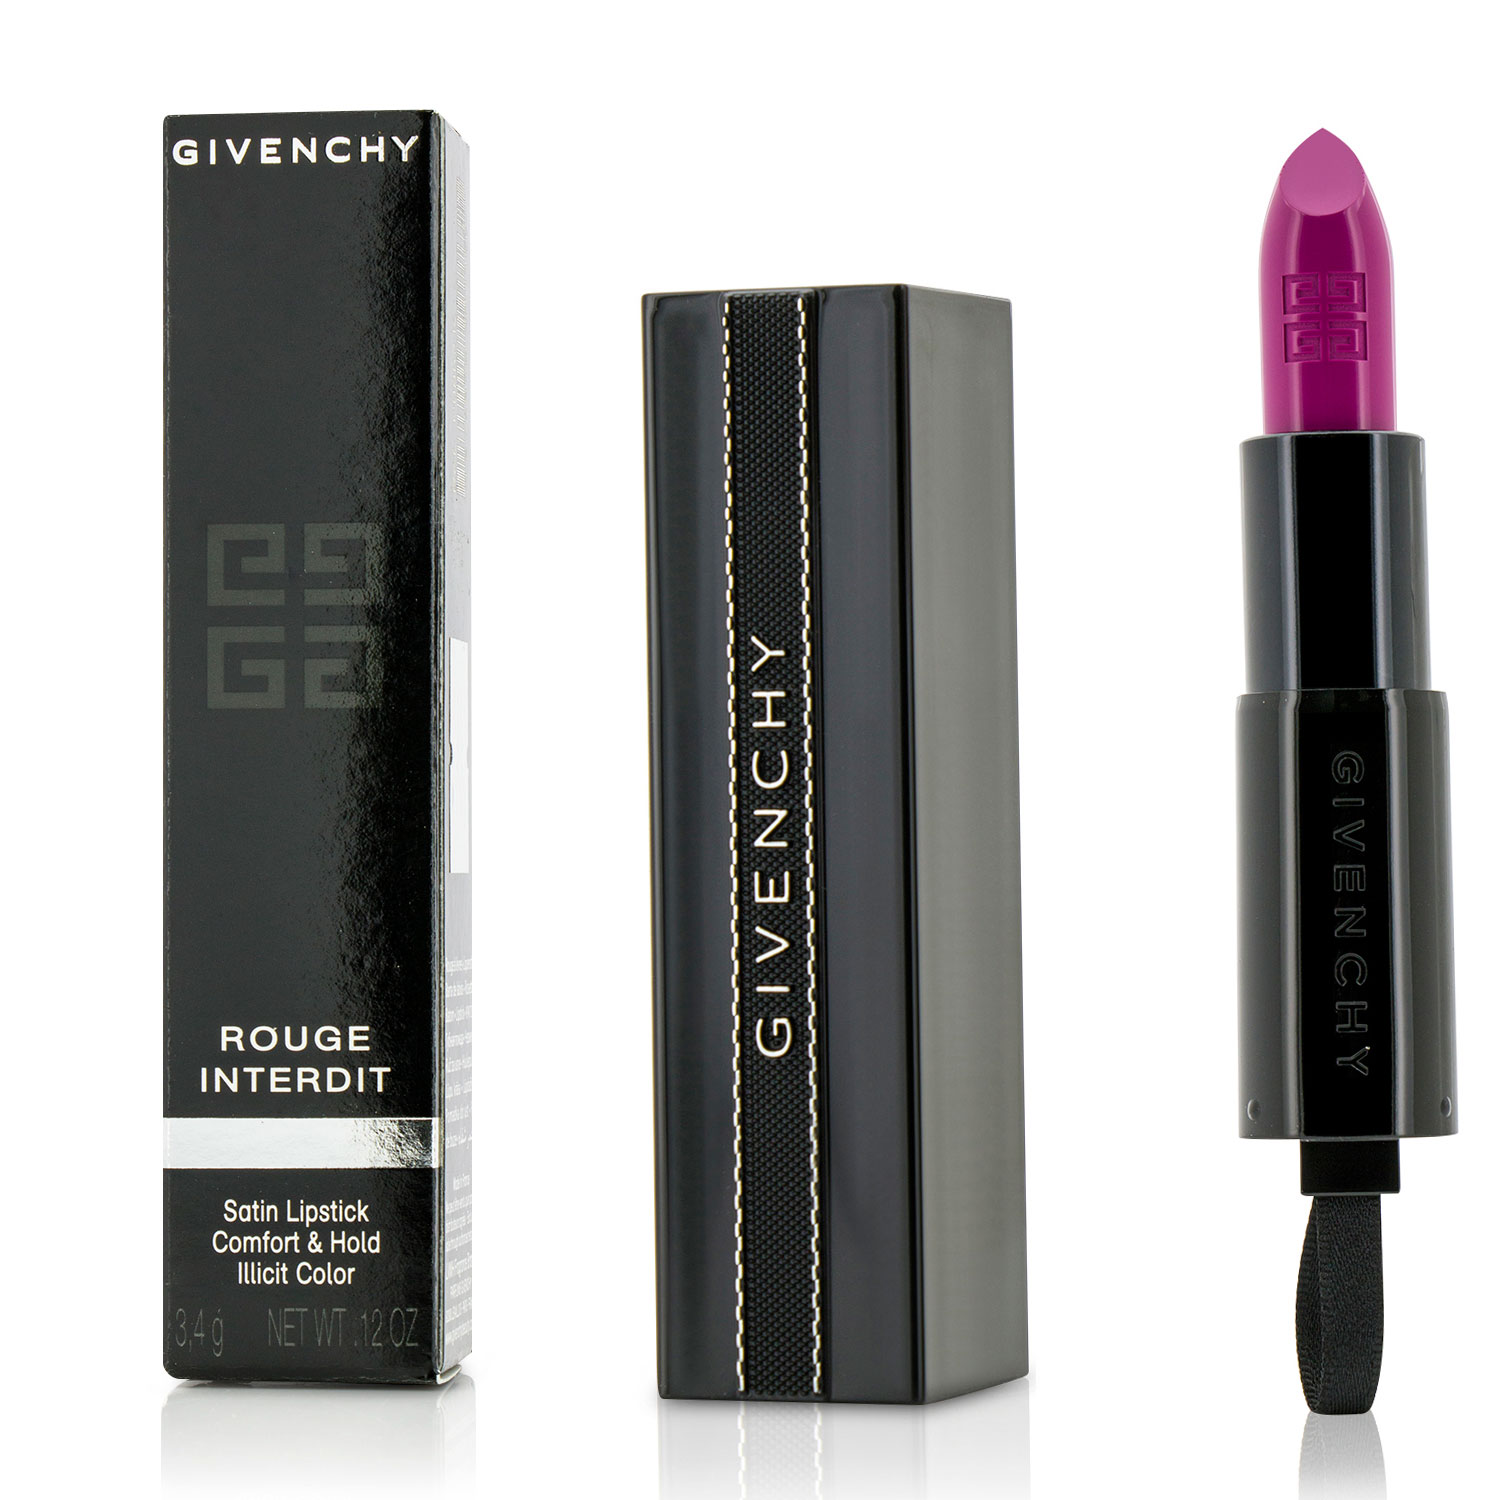 Rouge Interdit Satin Lipstick - # 24 Ultravioline Givenchy Image